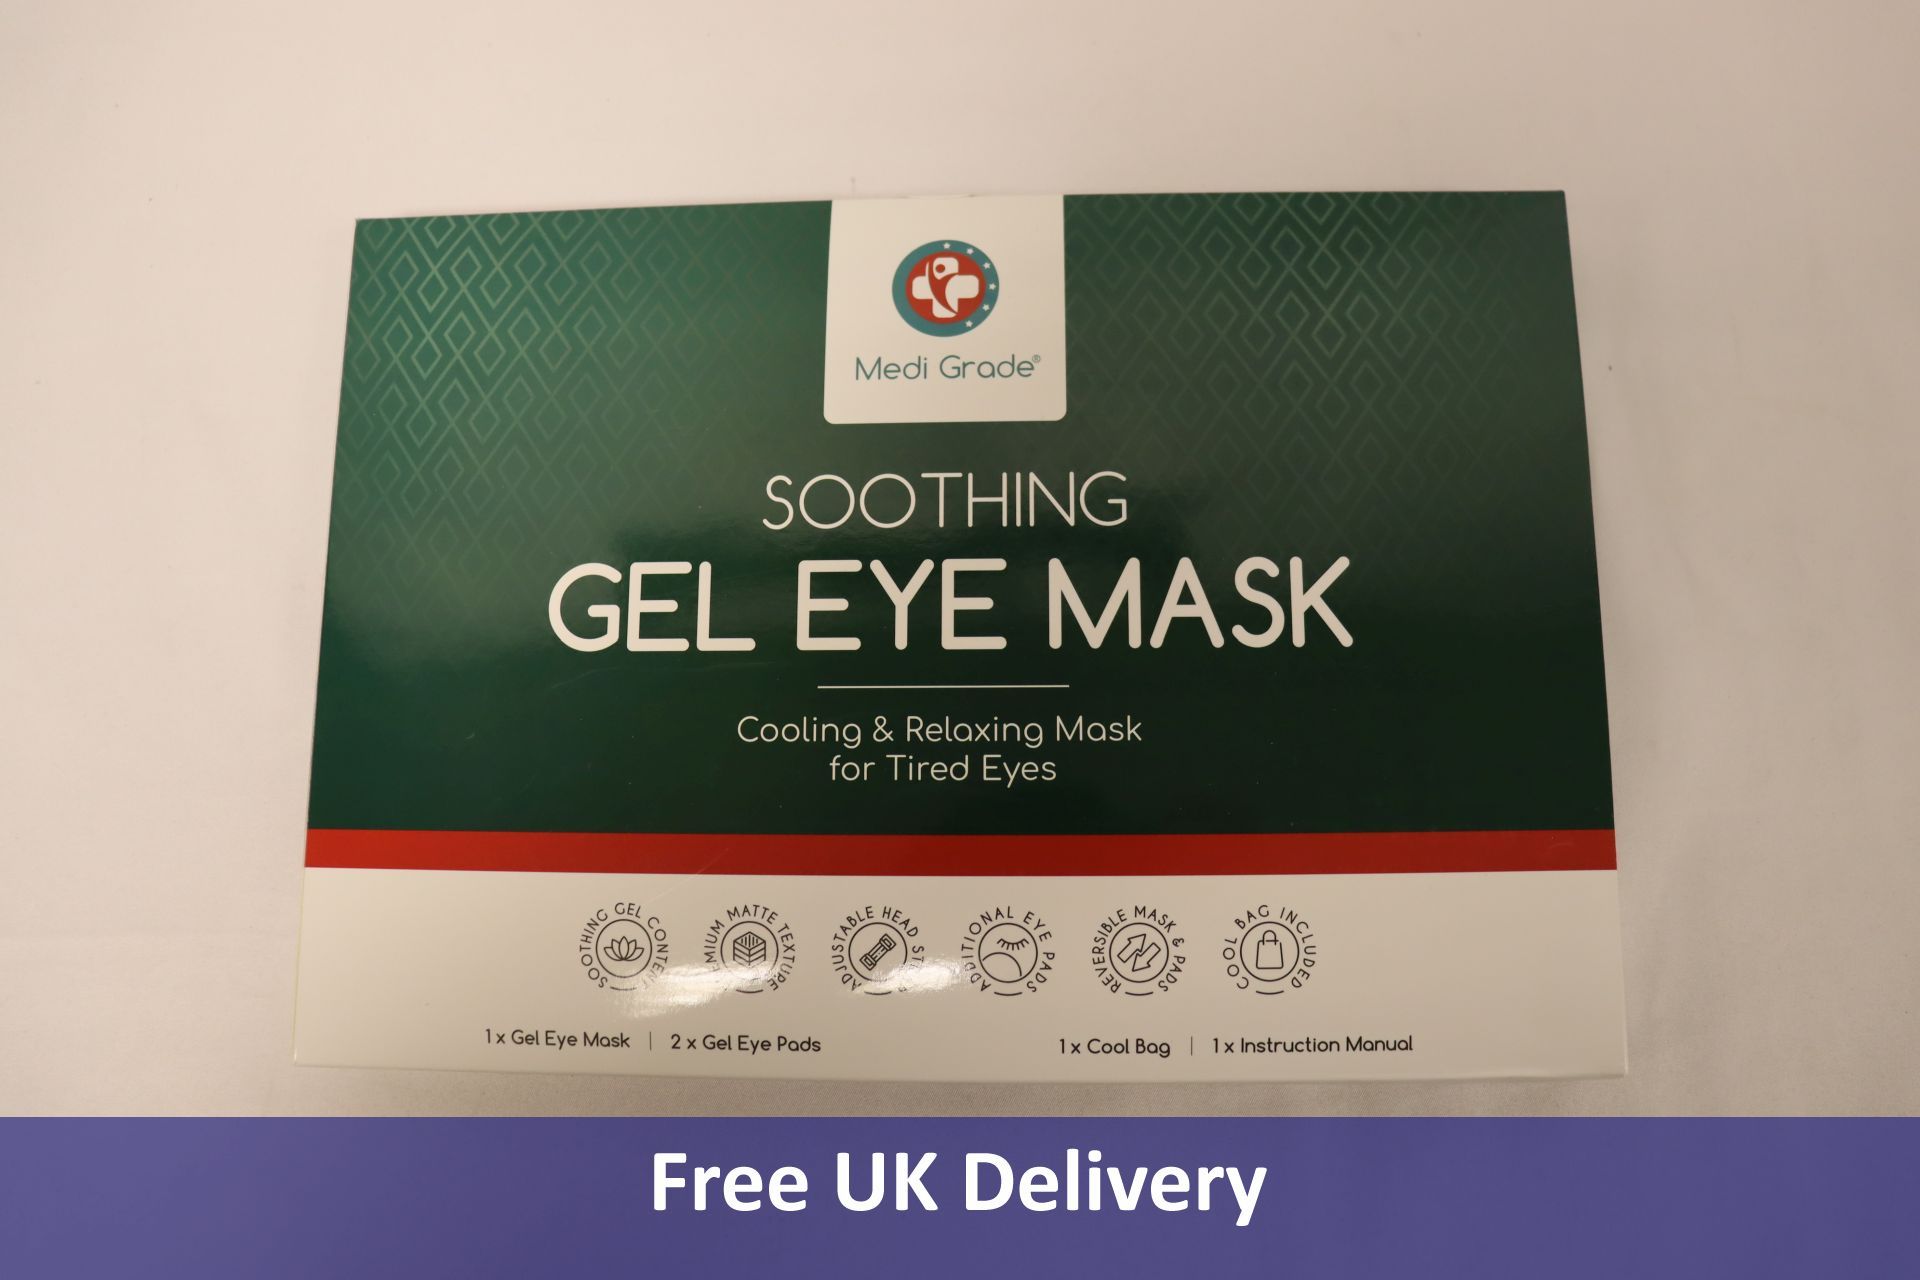 Twenty Medi Grade Soothing Gel Eye Mask Sets to include 1x Gel Eye Mask, 2x Gel Eye Pads, 1x Cool Ba